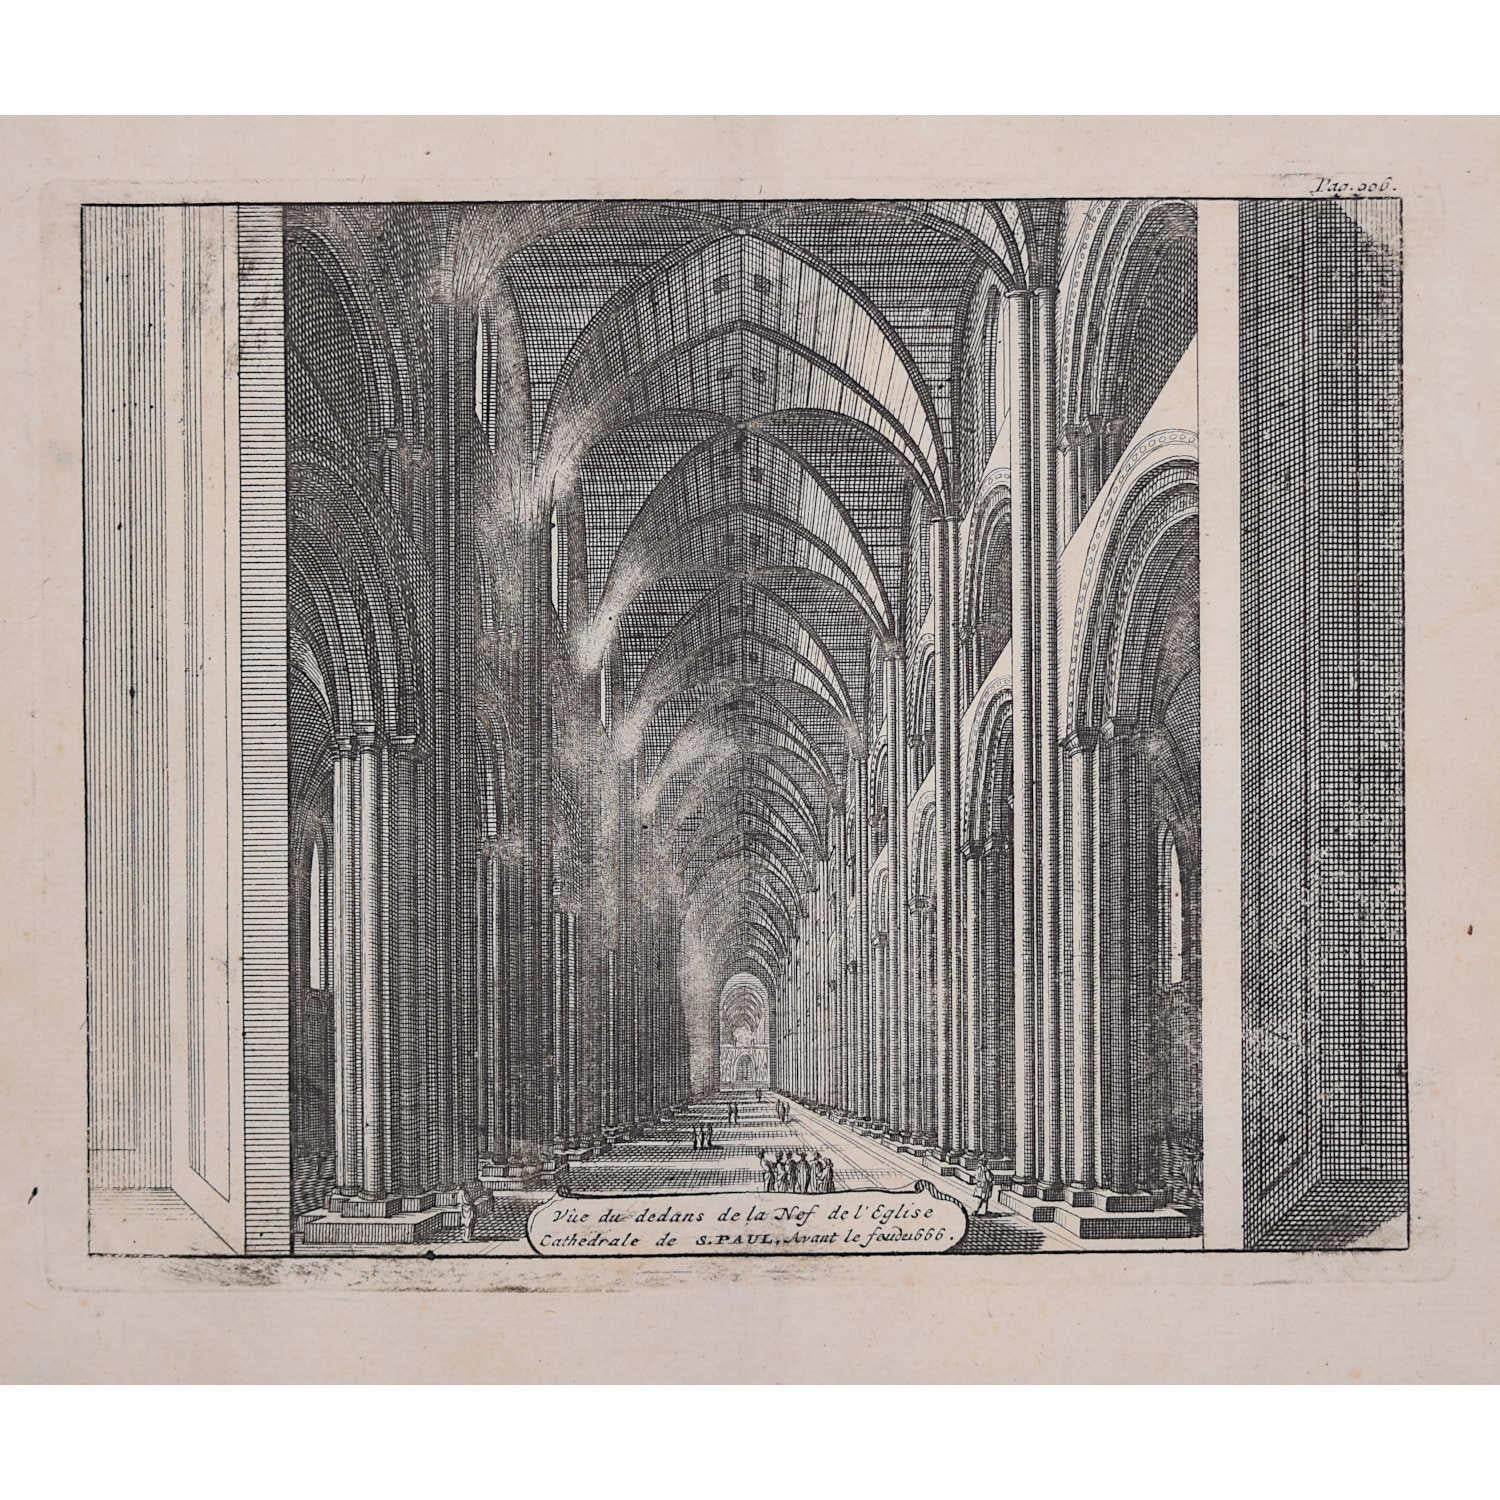 Pieter van der Aa: 'Old St Paul's Cathedral', after Jan Kip